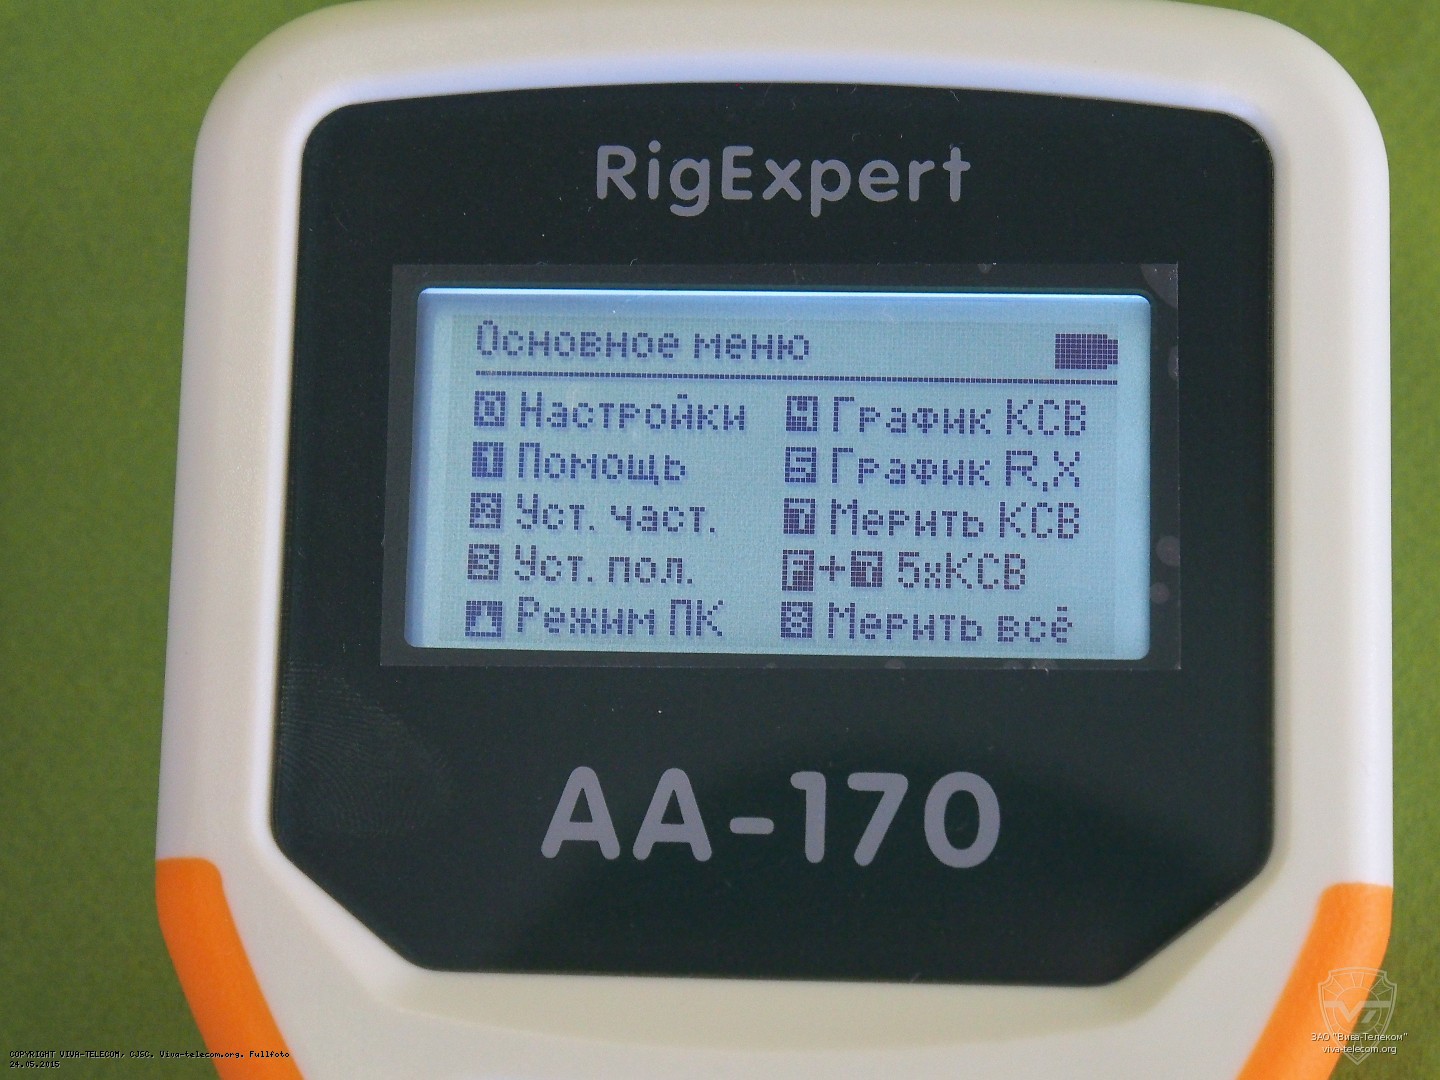    RigExpert AA-170